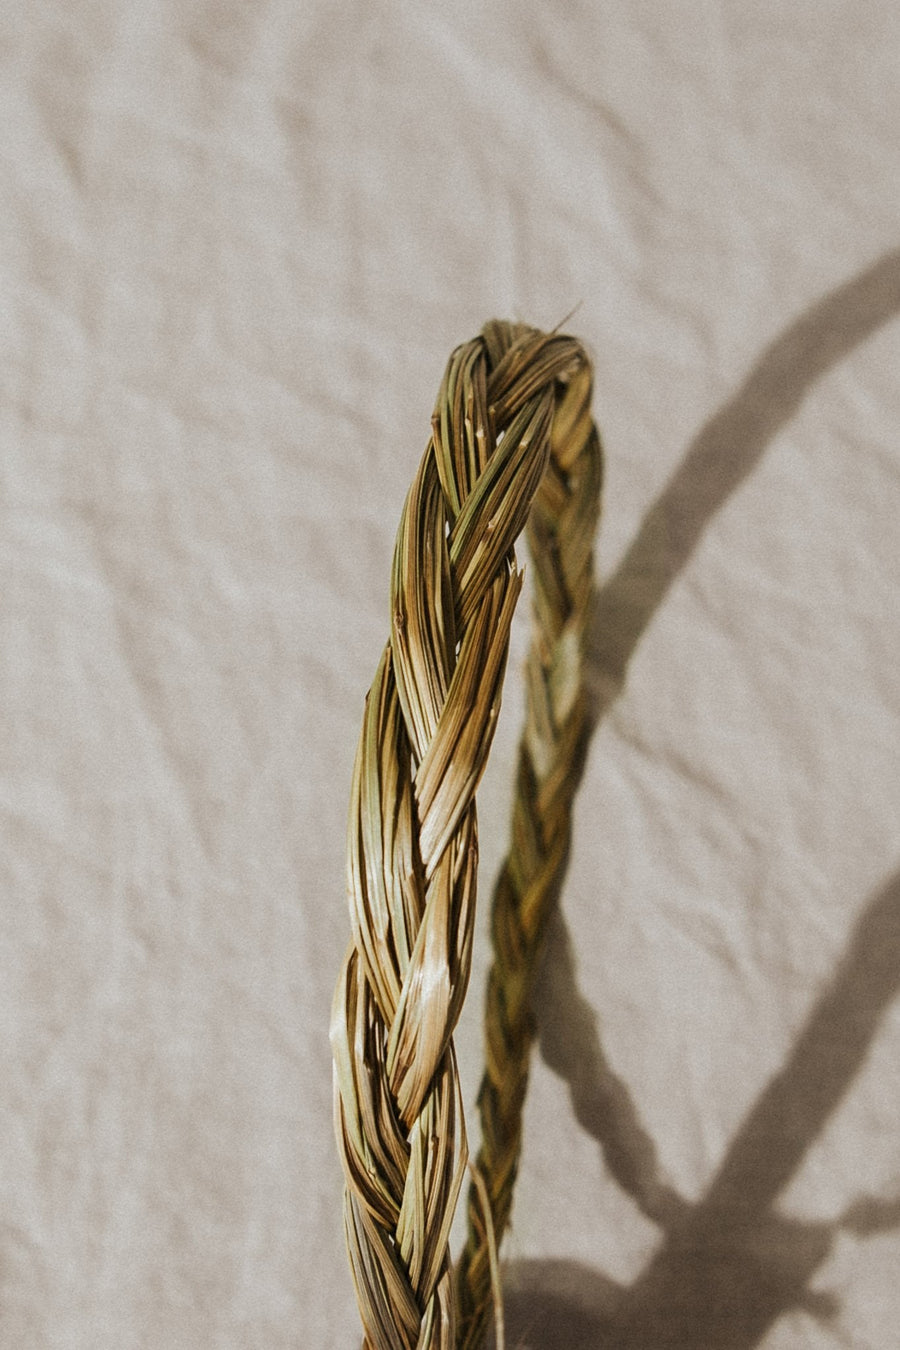 OM Imports Objects Grass / FINAL SALE Sweetgrass Braid